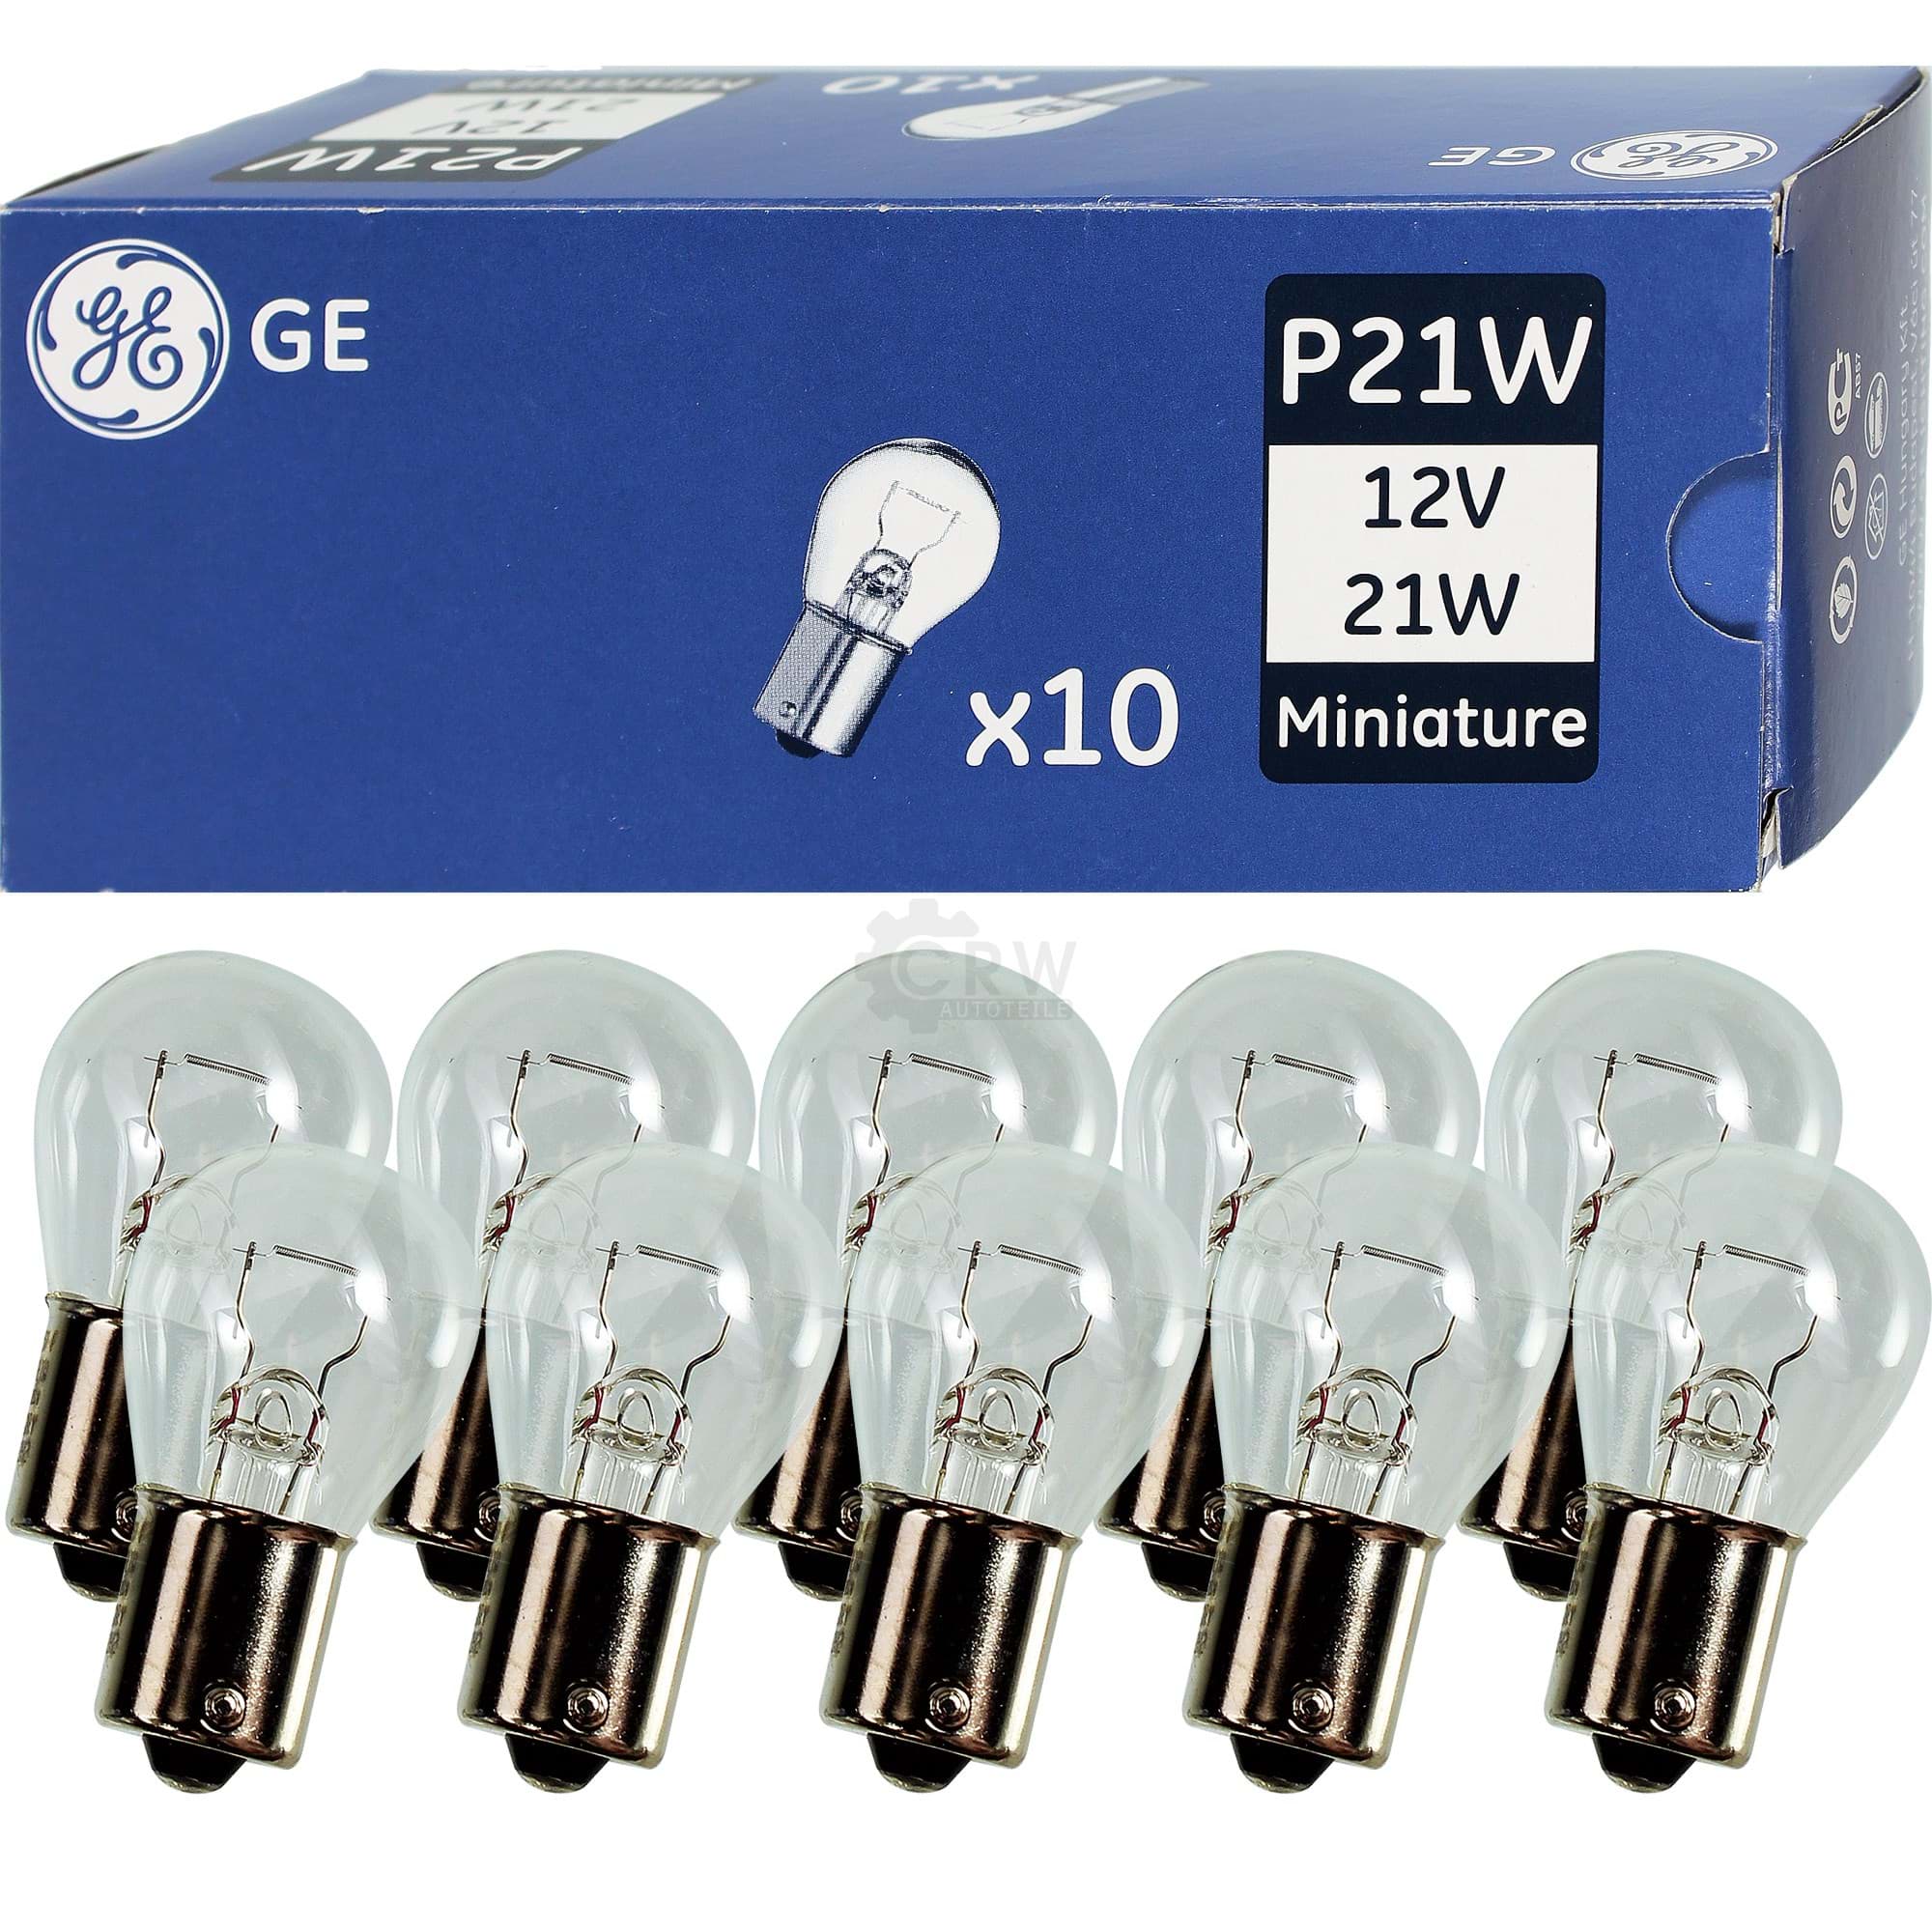 General Electric (GE) Miniature P21W 12V 21W BA15s 